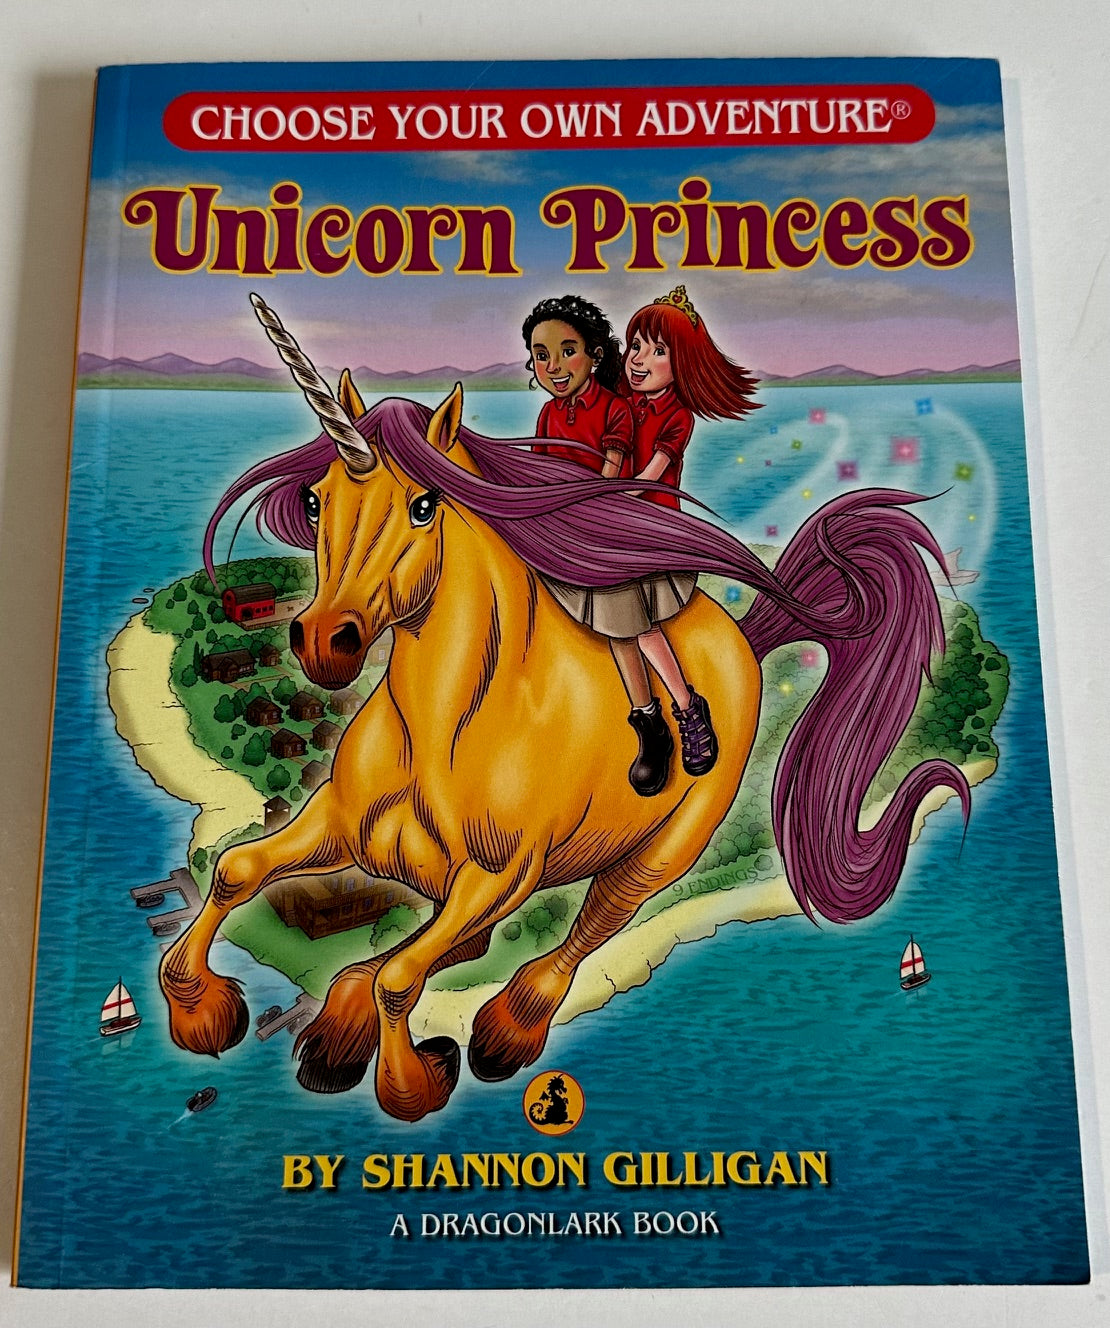 "Choose Your Own Adventure: Unicorn Princess"